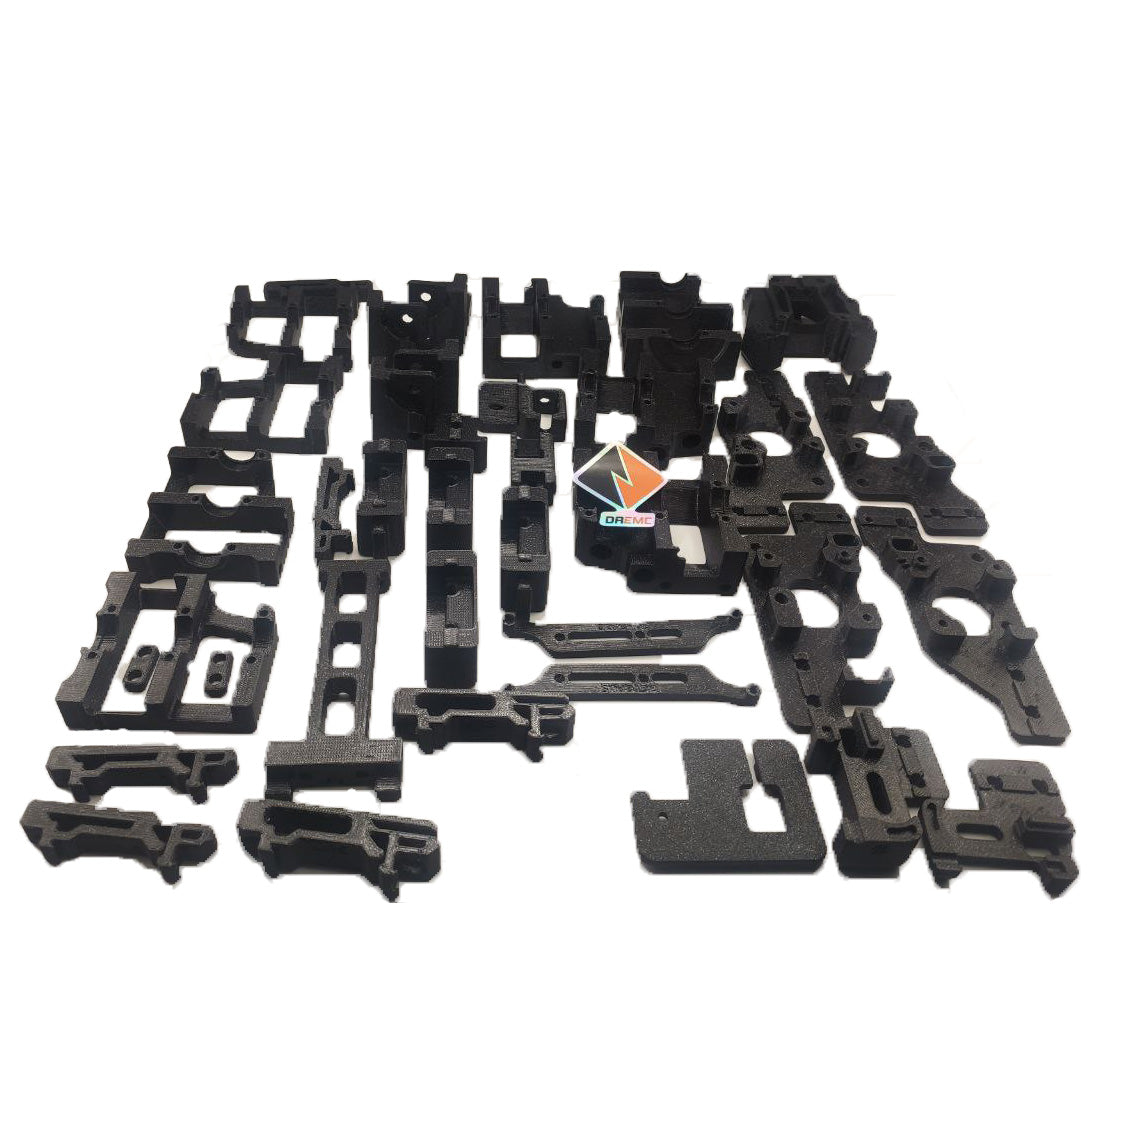 LDO 2.4R2 Voron RevC 300/350 Functional Printed parts by DREMC